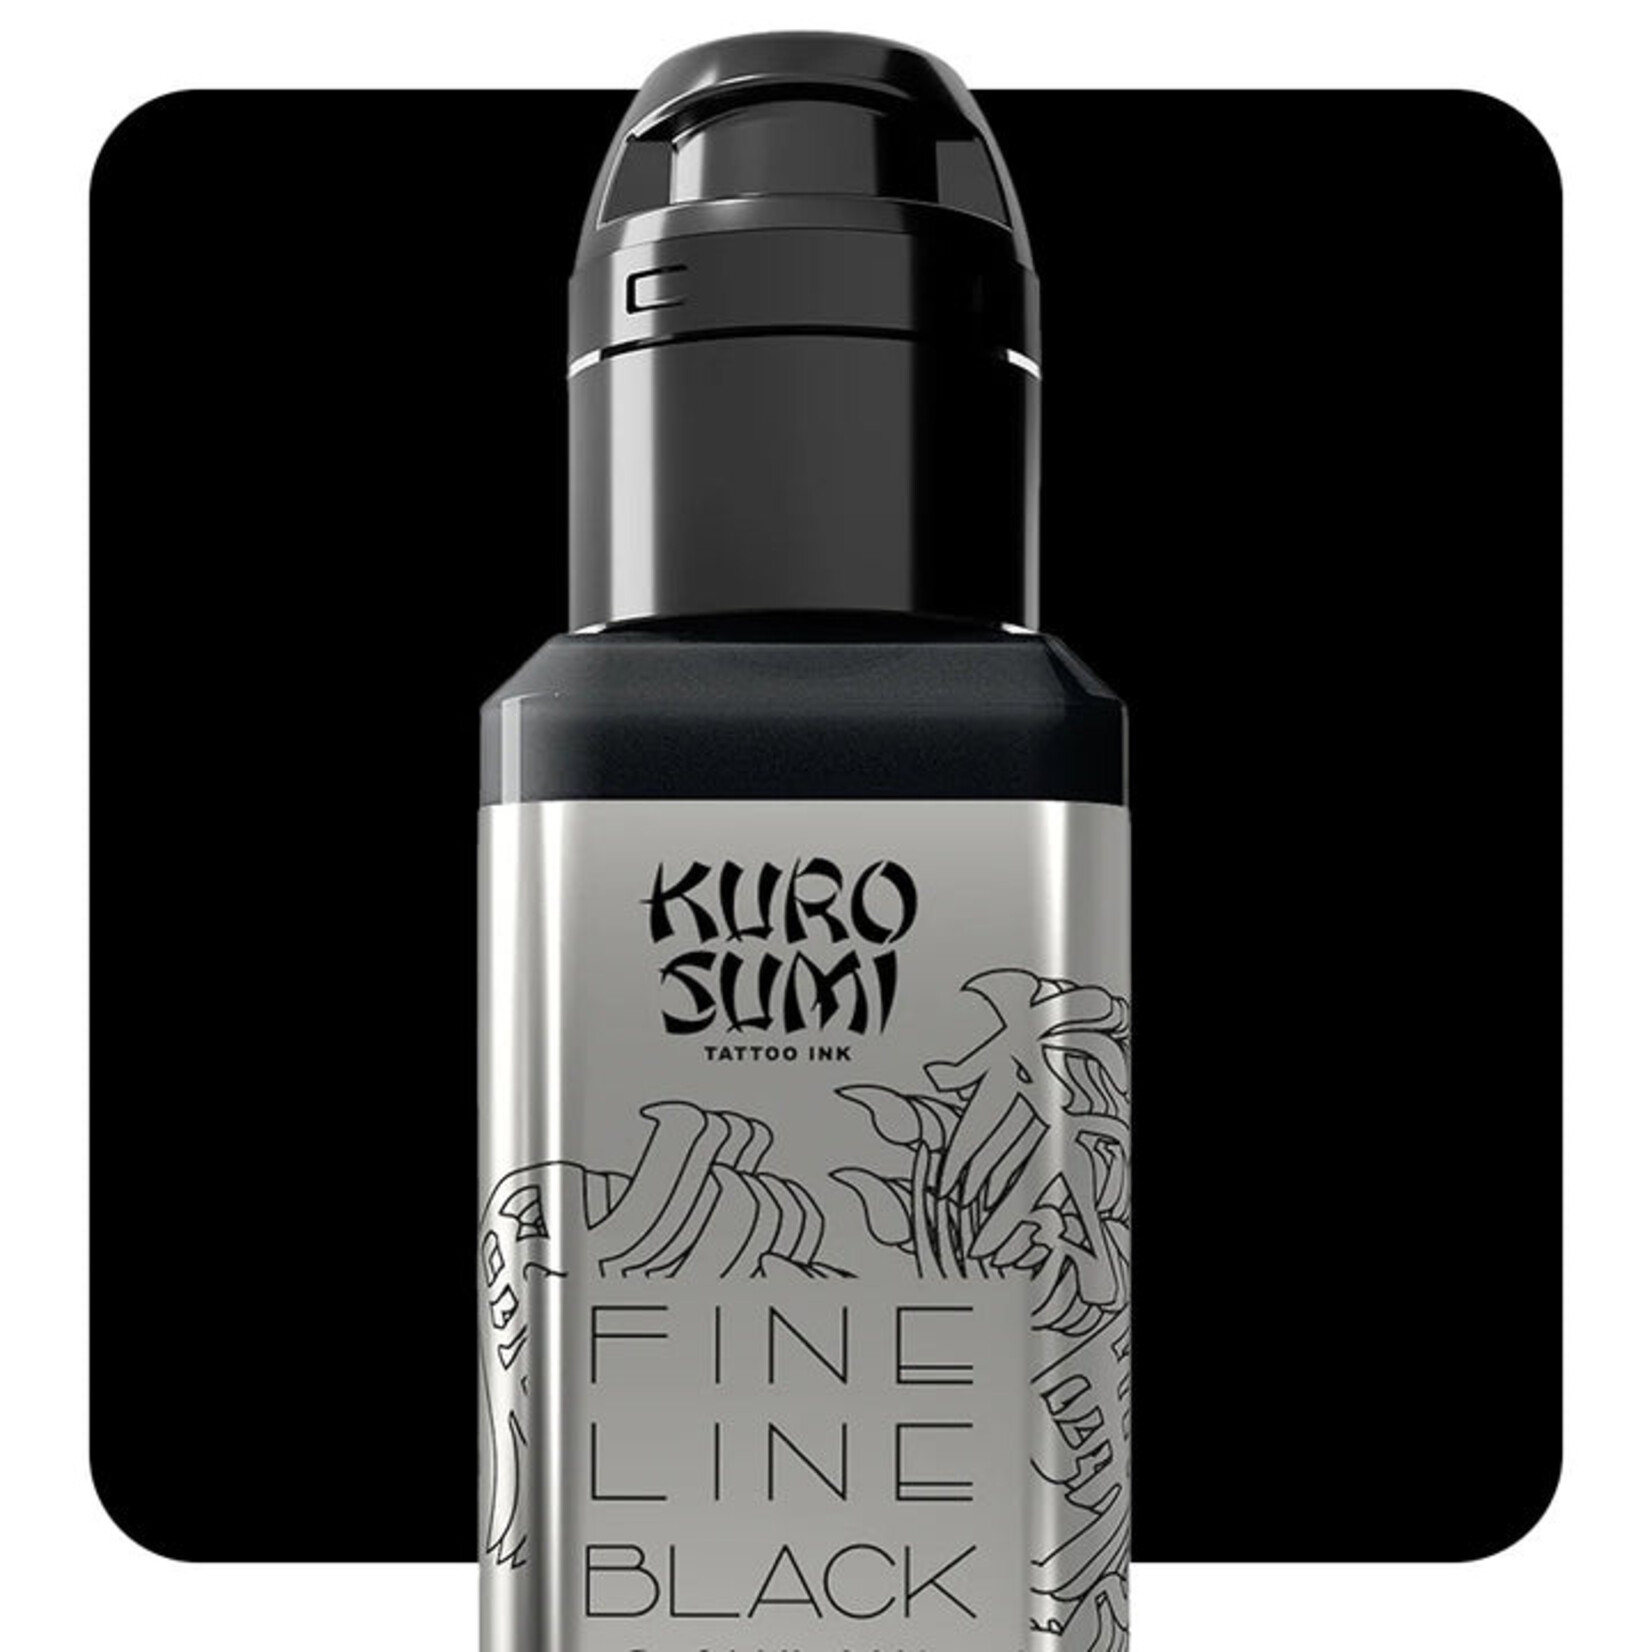 KURO SUMI TATTOO INK FINE LINE BLACK — KURO SUMI TATTOO INK — 1.5OZ BOTTLE